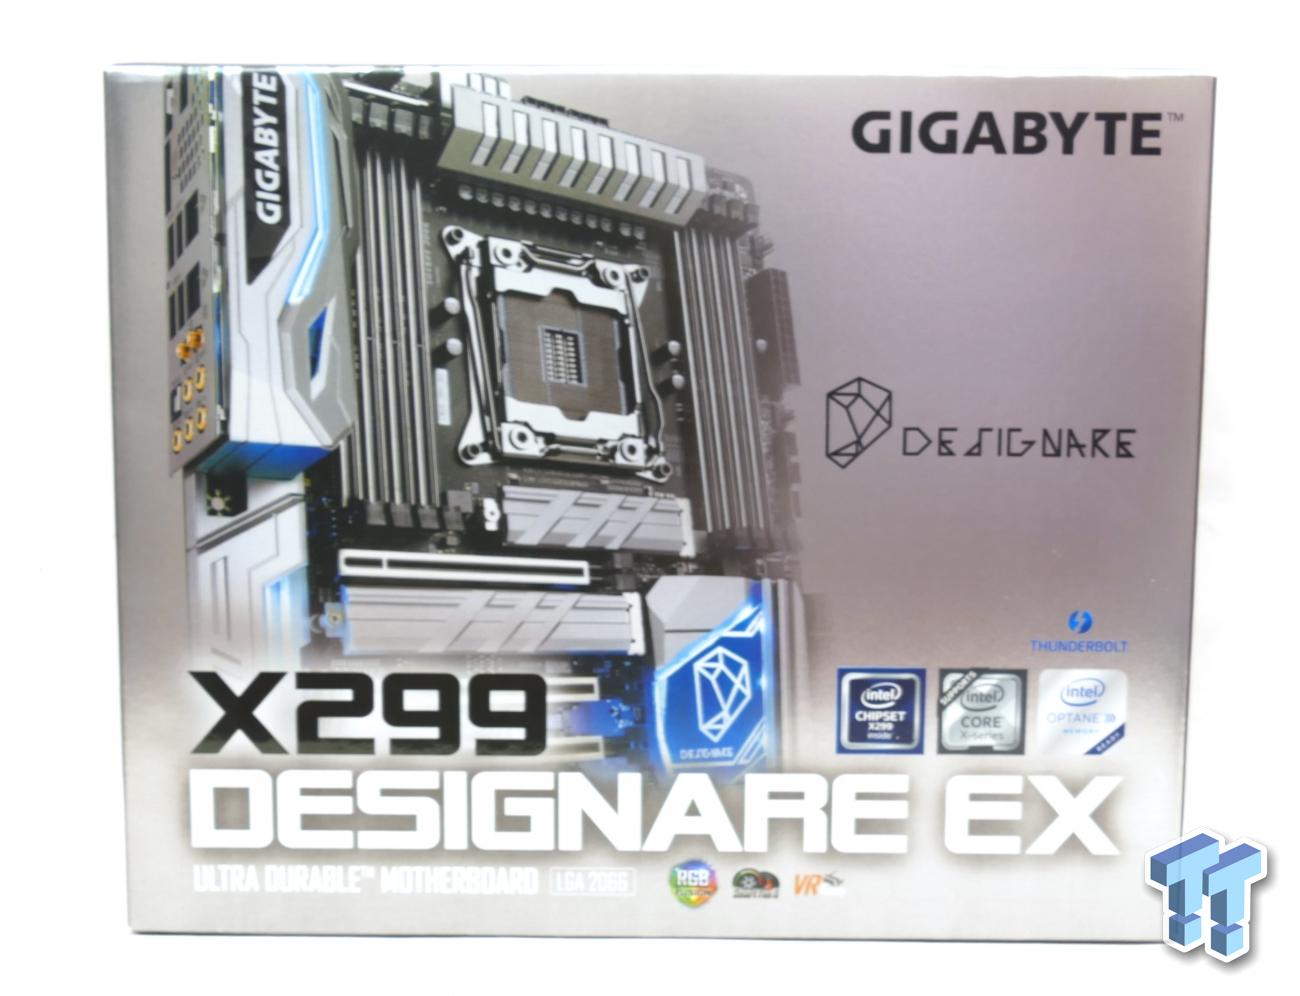 GIGABYTE X299 DESIGNARE EX Intel LGA 2066 Core i9/ ATX /3M.2 Thermal Guard/Front & Rear USB 3.1 gen 2 Type-C/ ALC1220/ RGB Fusion / Dual LAN/ Intel WIFI/3 Way SLI/ Motherboard 